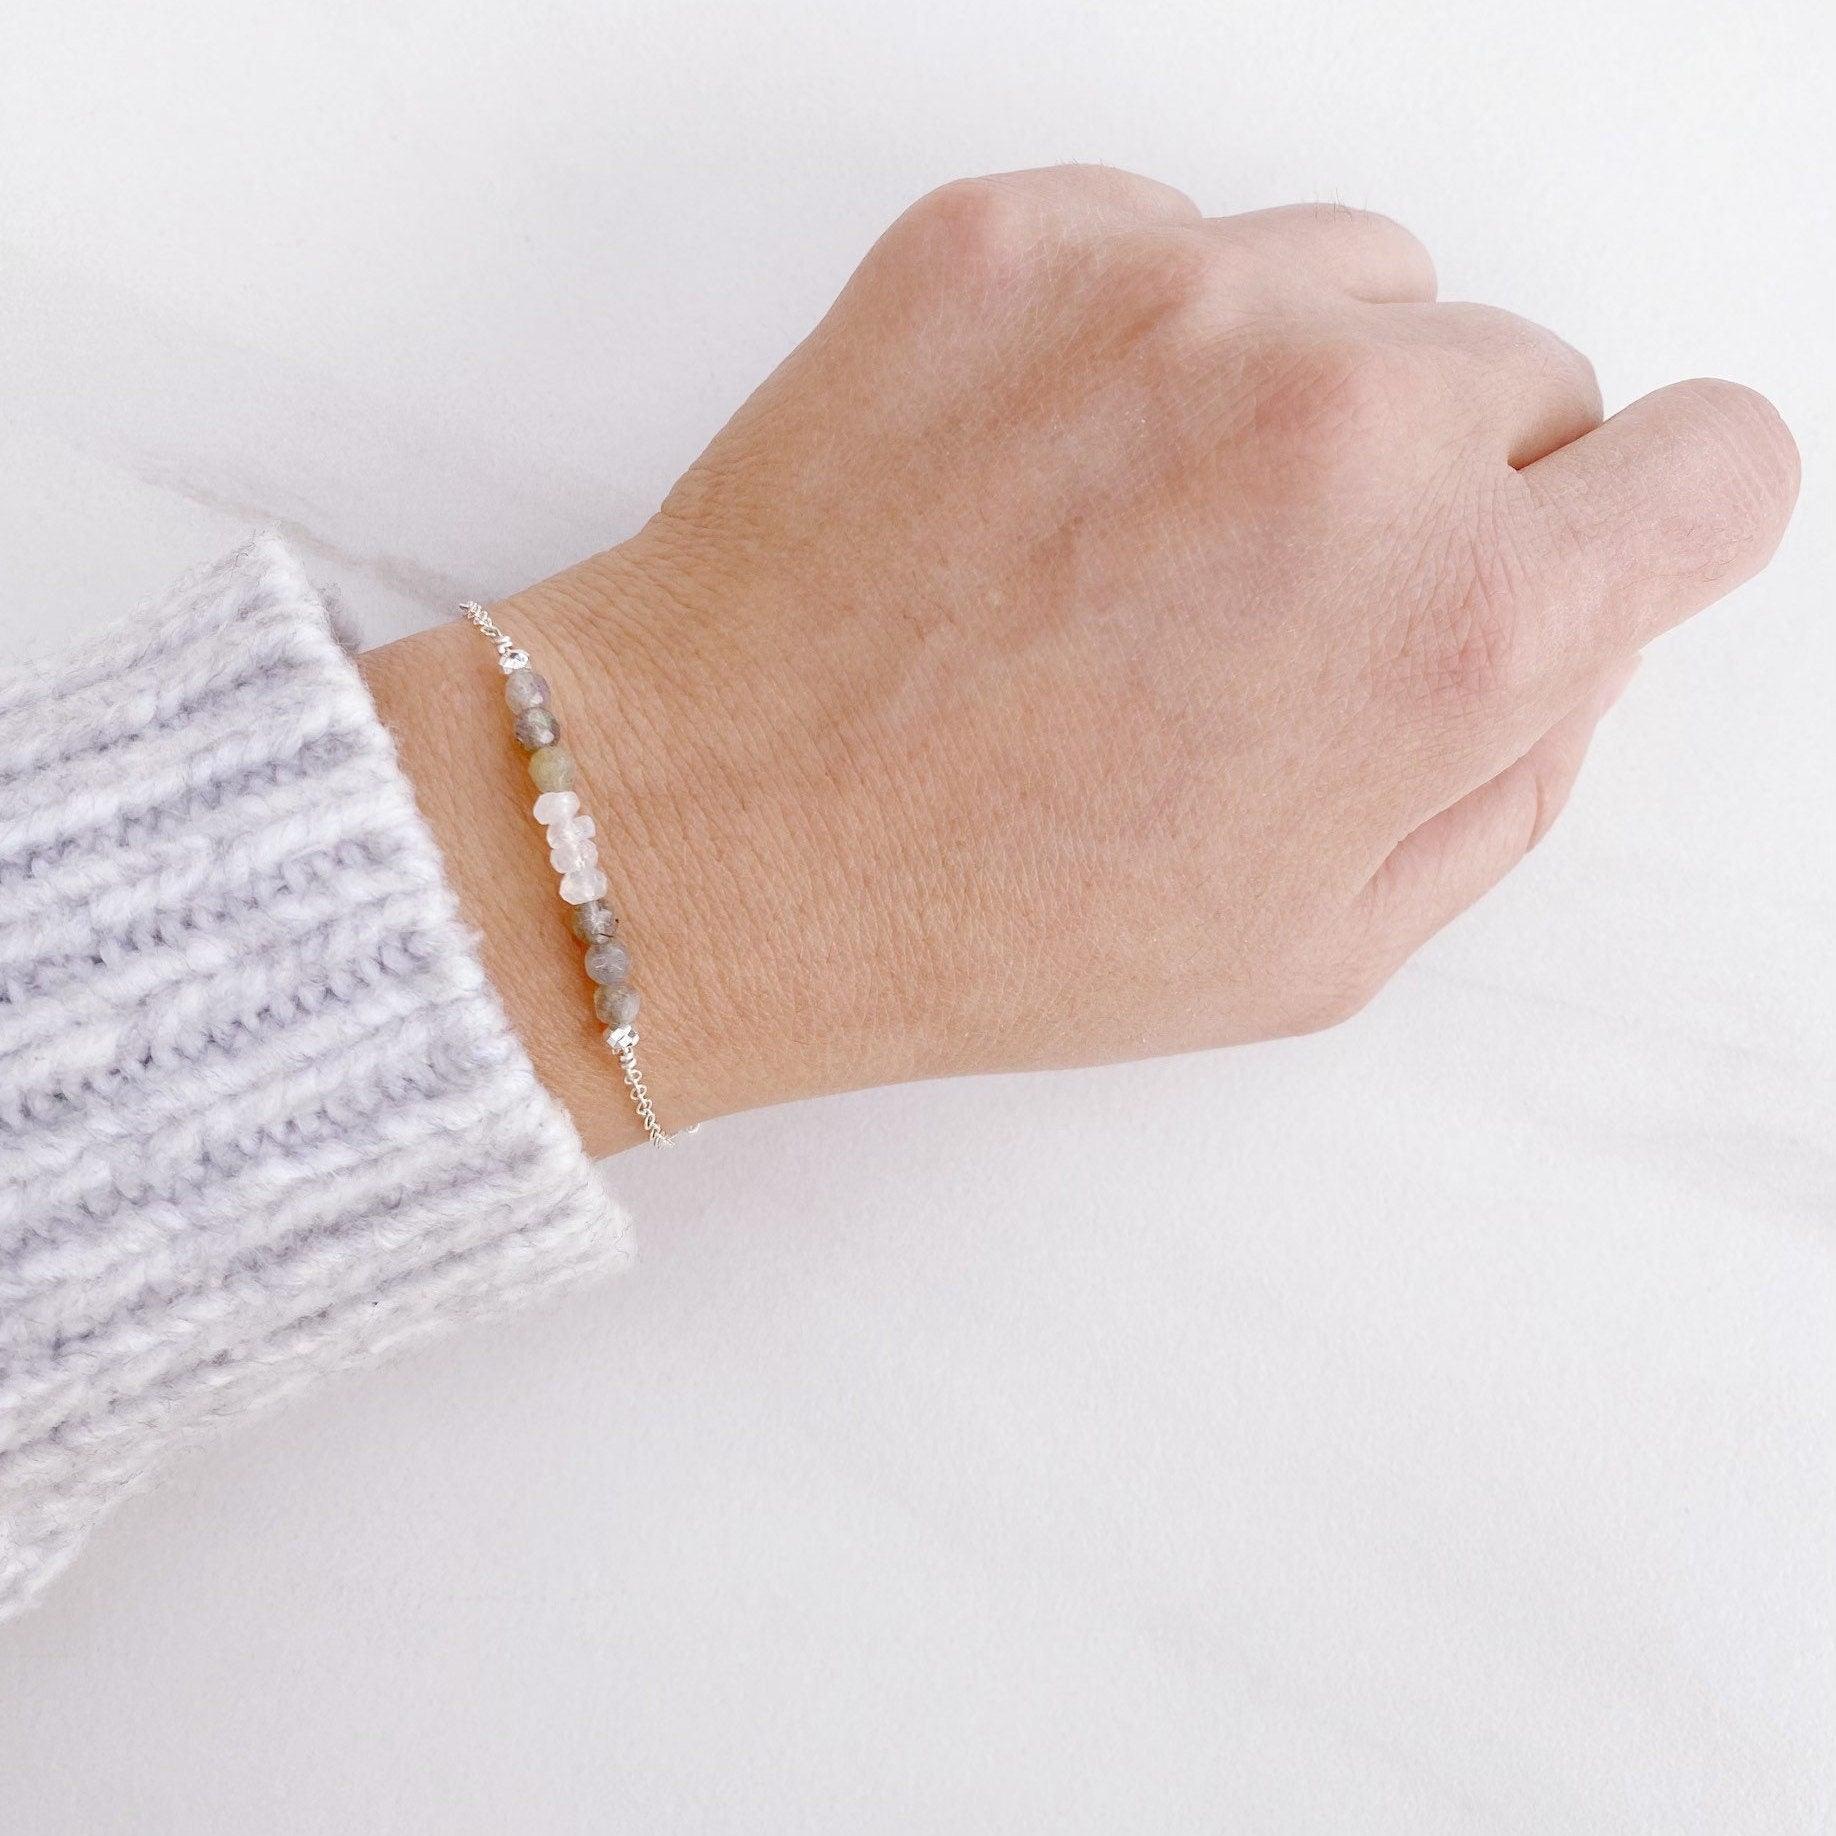 Dainty Labradorite & Moonstone Reiki Infused Bracelet to Awaken Intuition - 3Rosebudsco.com